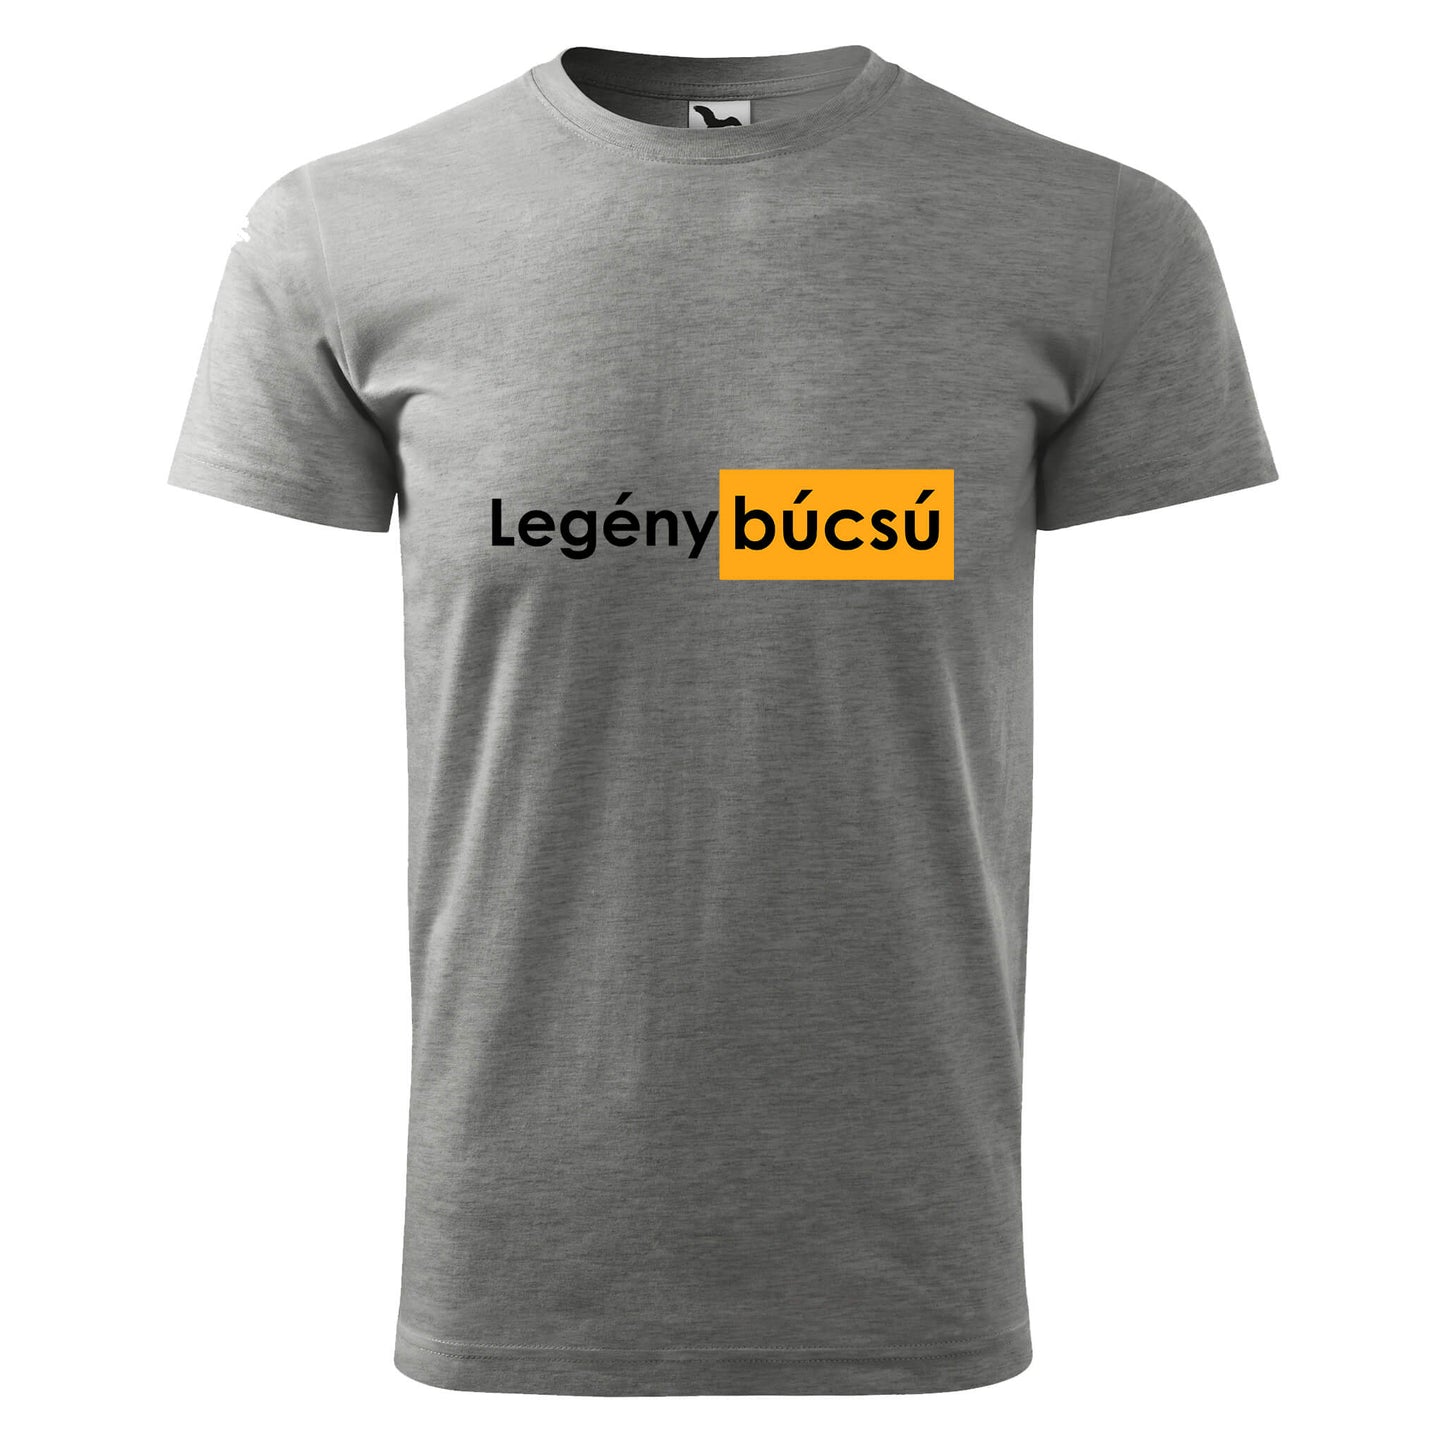 Legenybucsu pornhub logo t-shirt - rvdesignprint